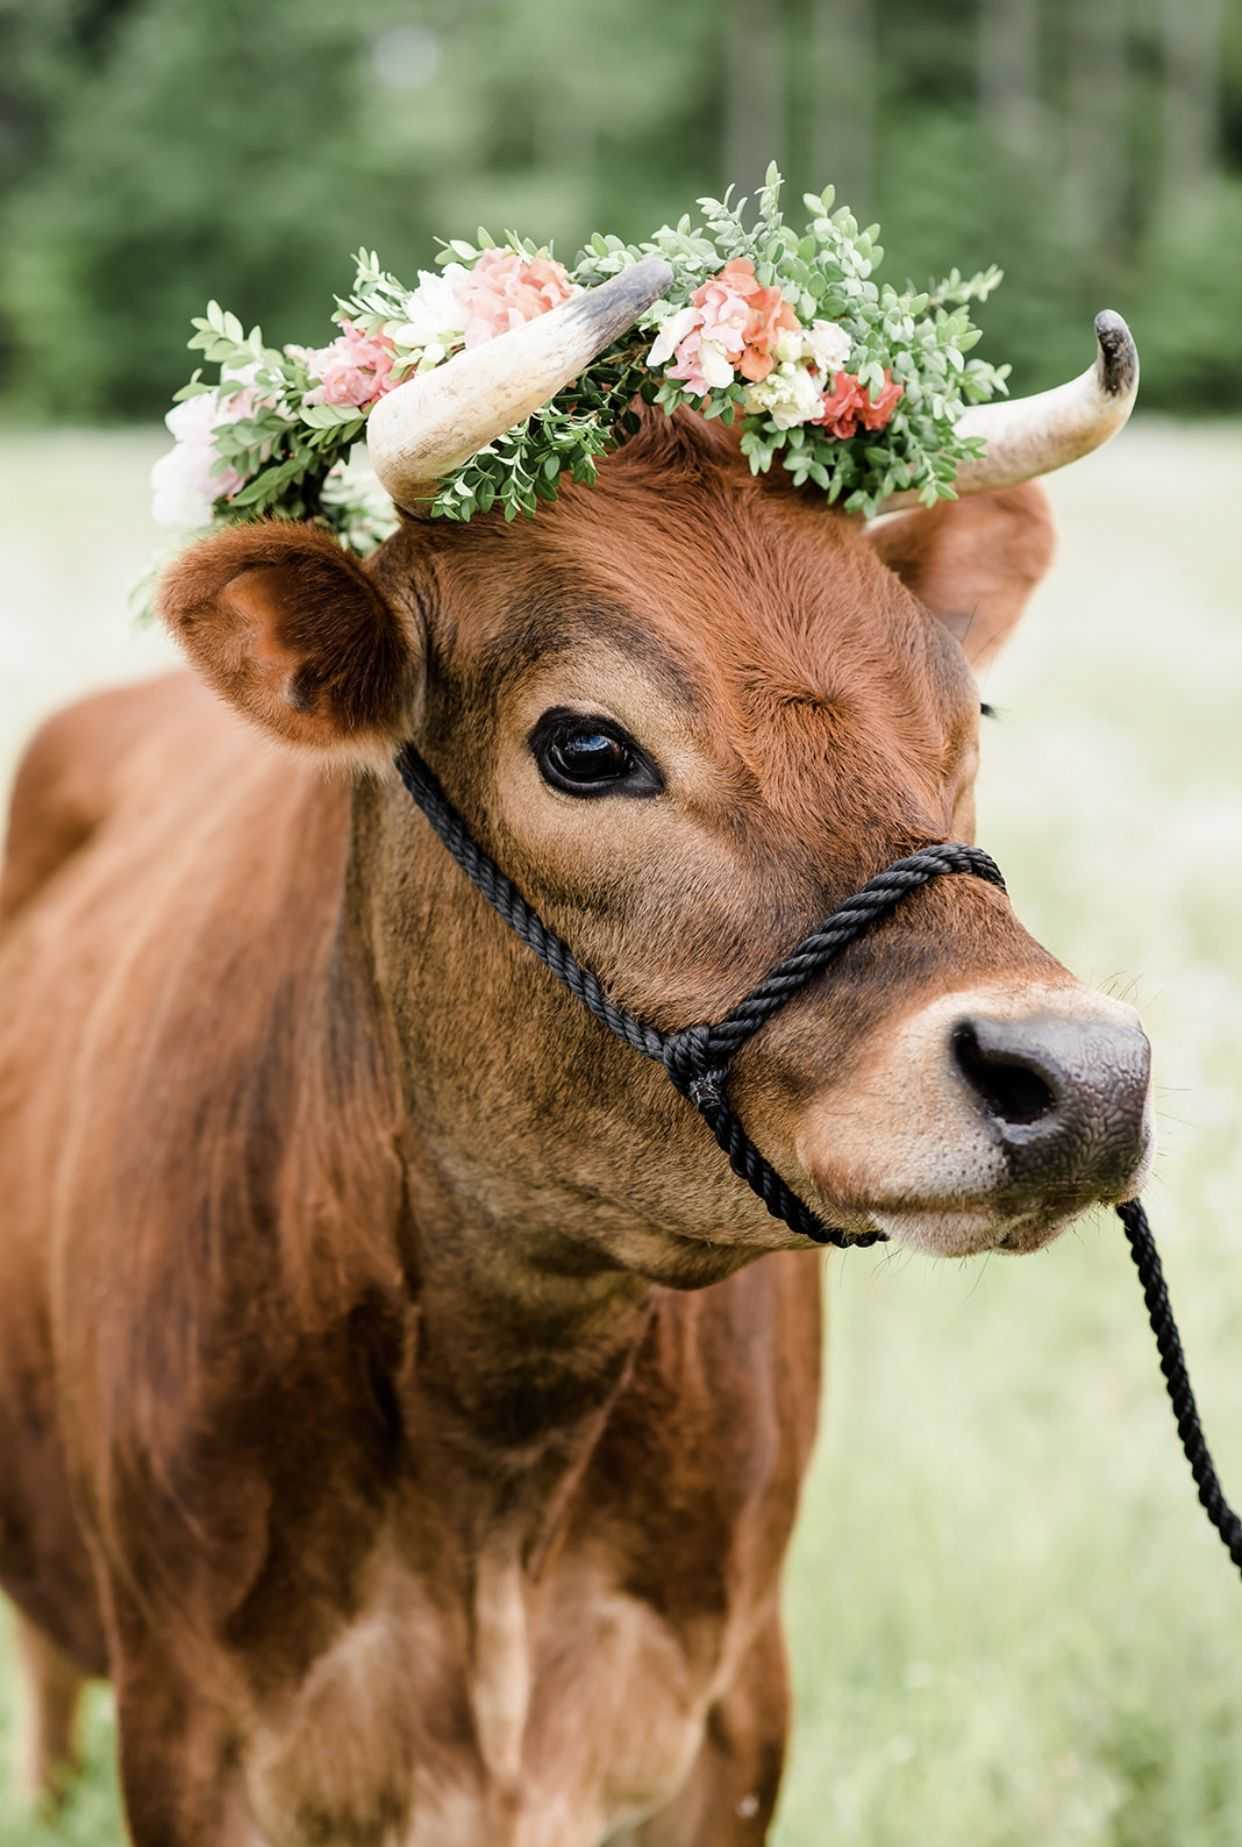 Cute Cow Wallpaper - NawPic